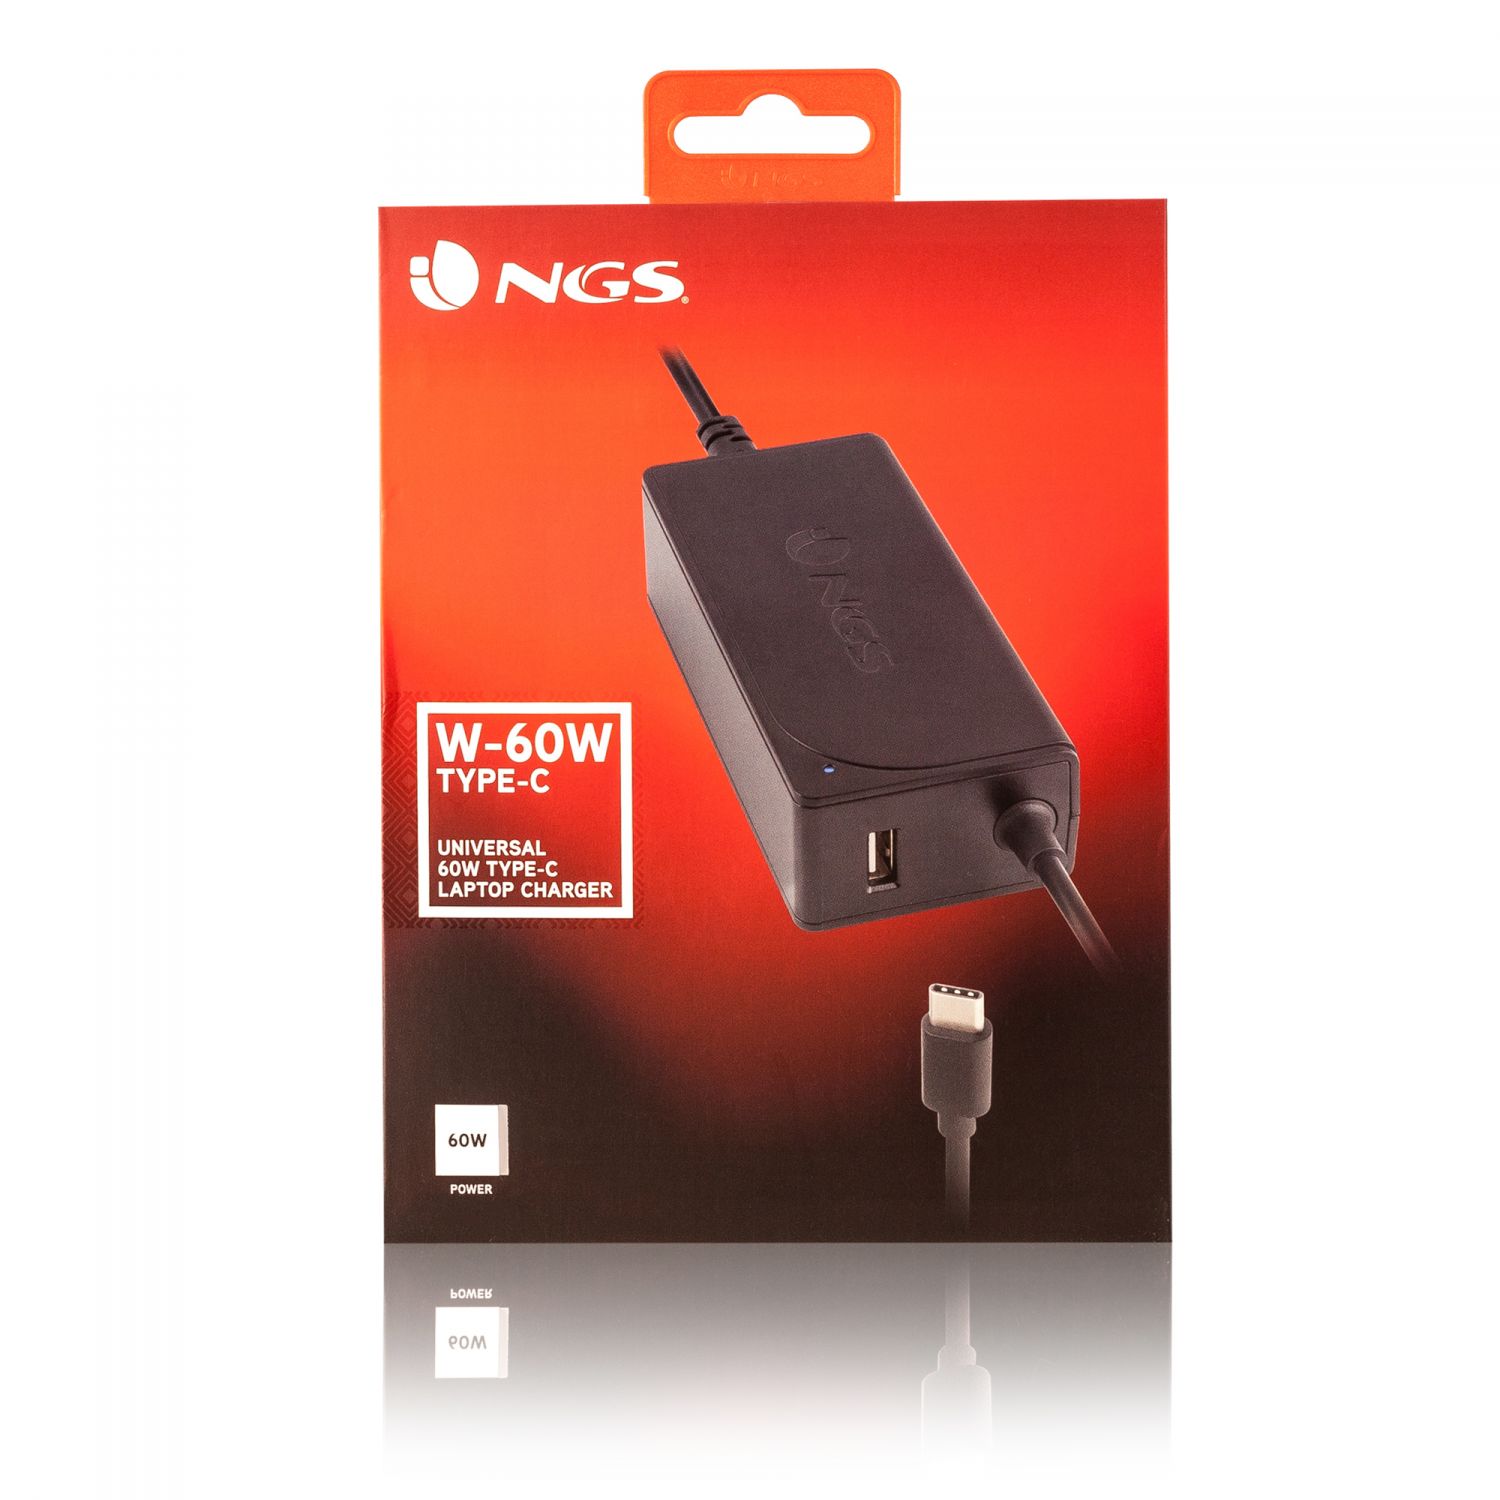 W-60WTYPEC - Cargador Notebook NGS 60W USB-C 2.0 Negro (W-60W TYPE-C)